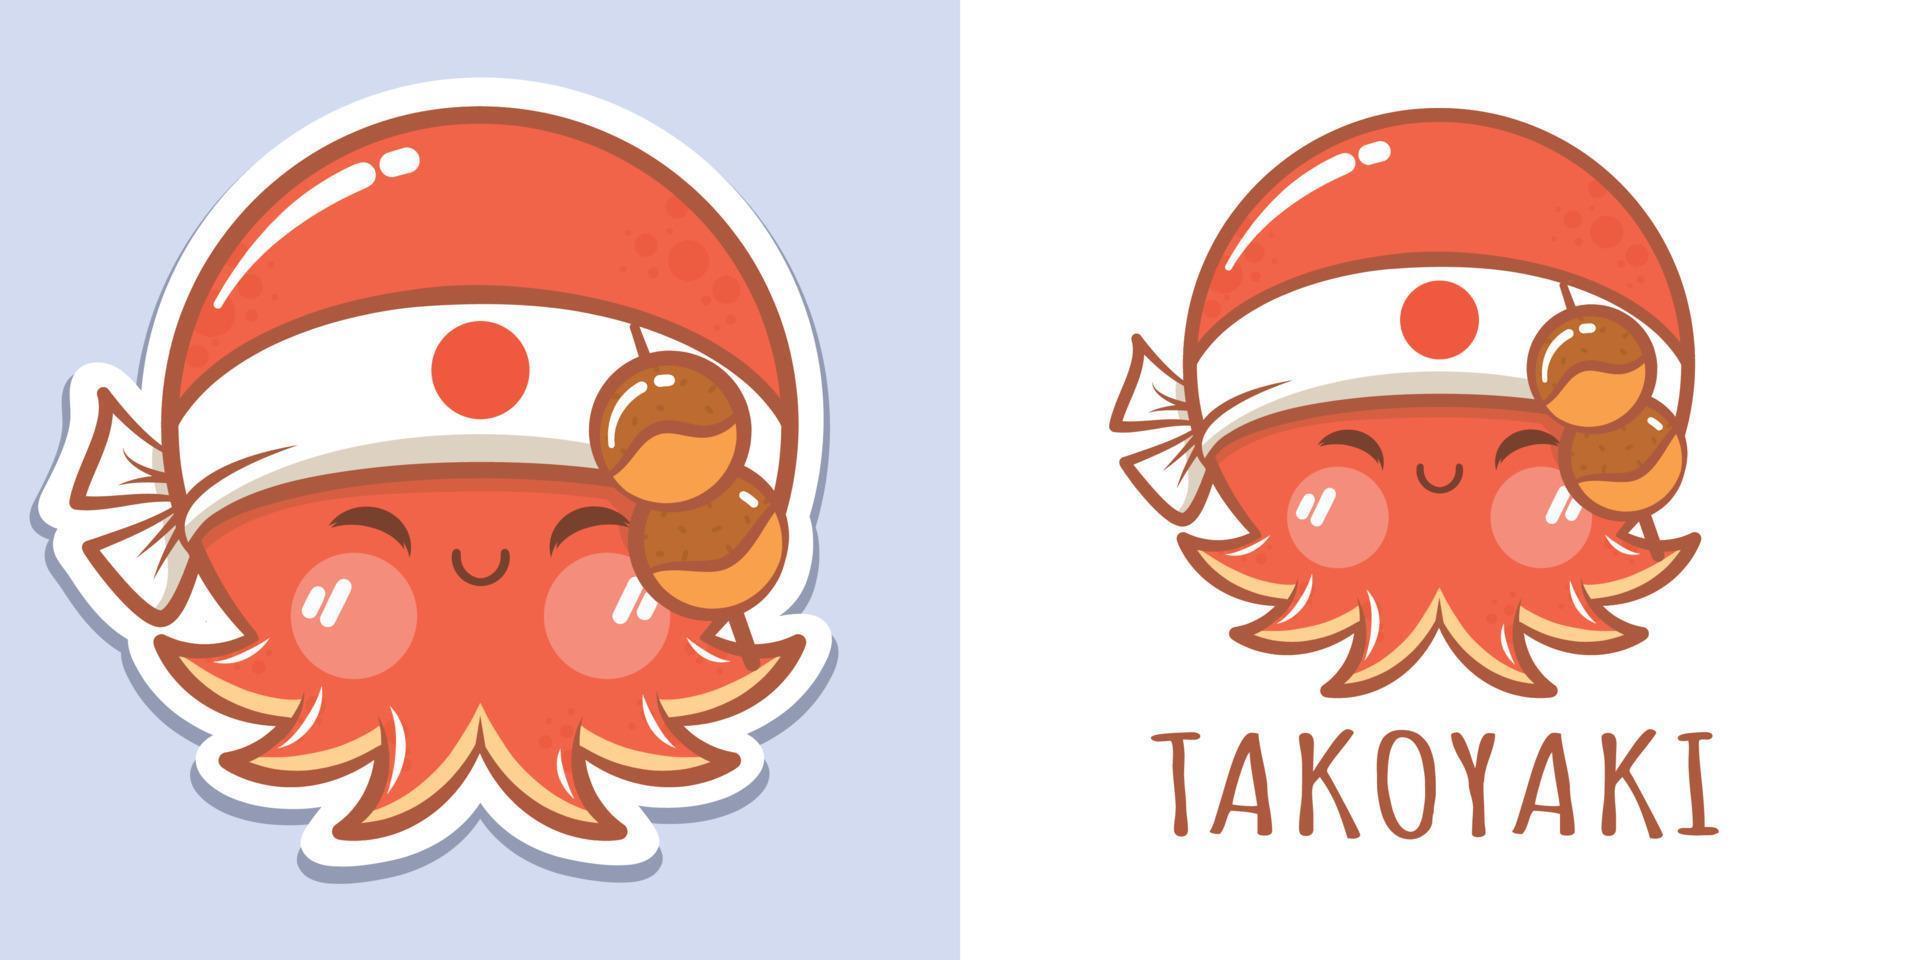 A cute octopus cartoon character takoyaki logo and mascot illustration vector